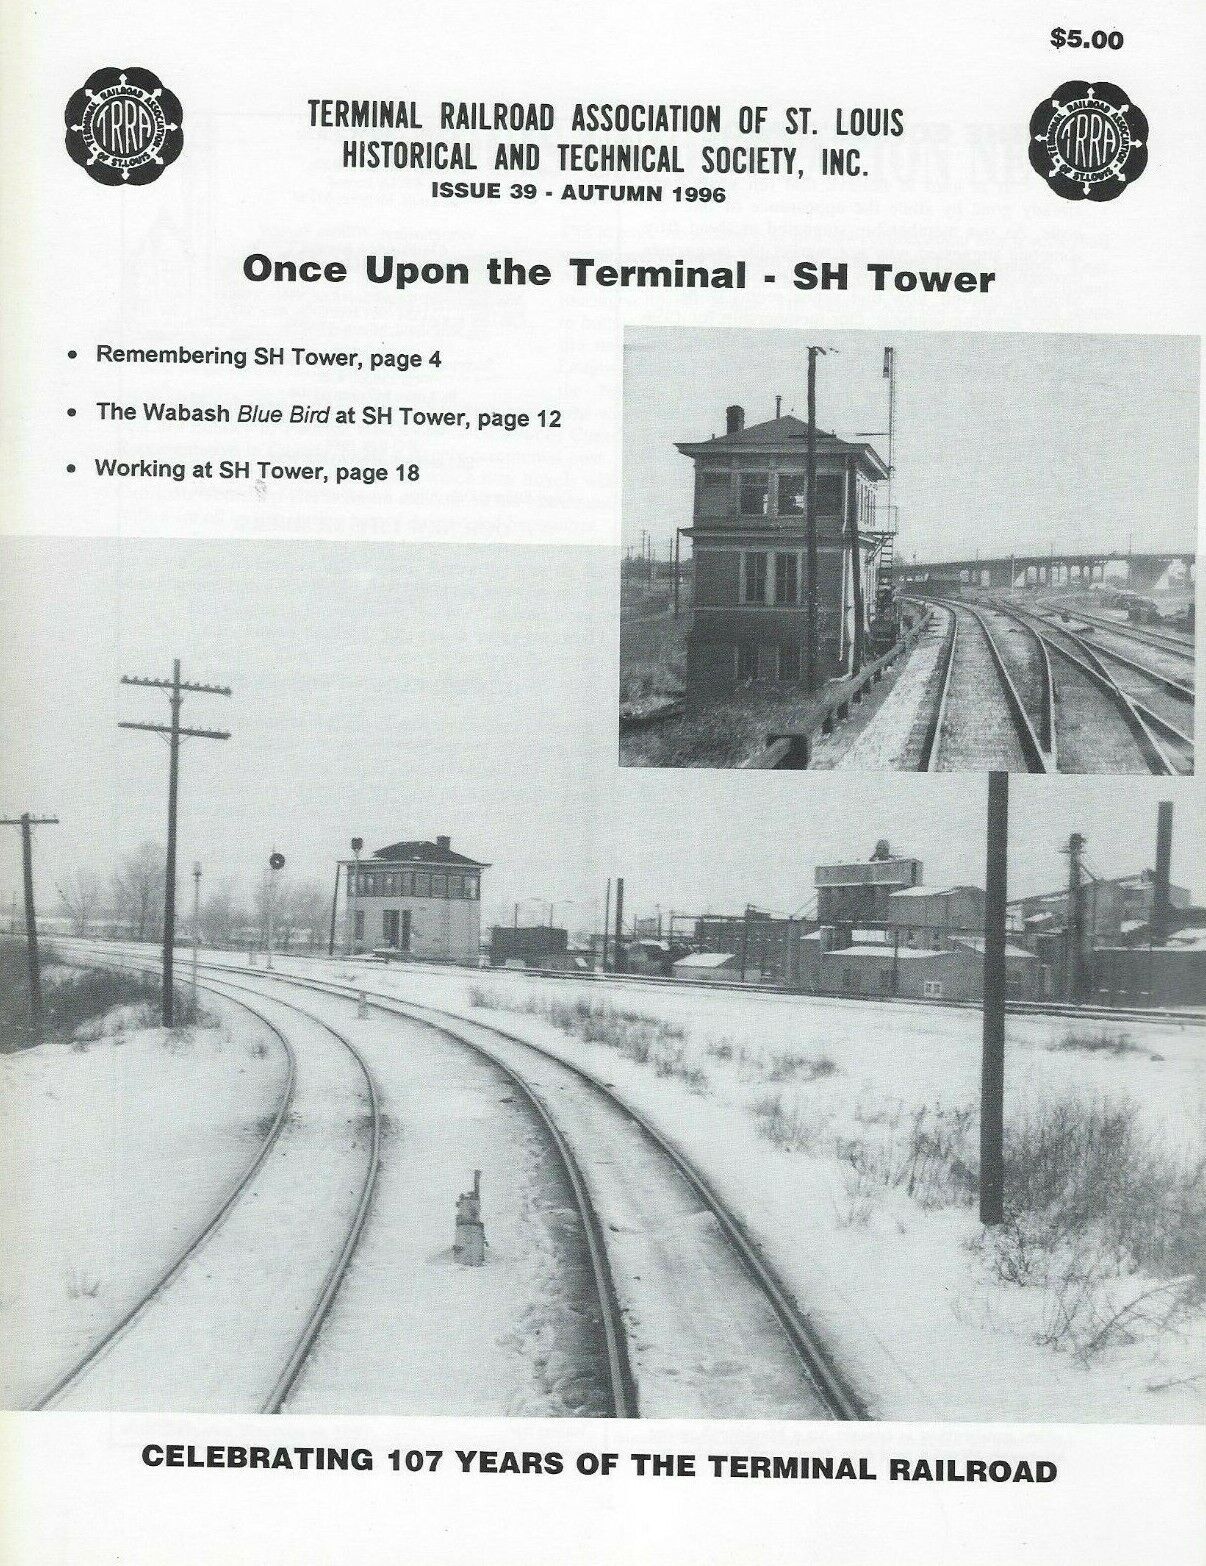 TERMINAL Railroad Assn., Issue 39, Autumn 1996 - (BRAND NEW ISSUE)